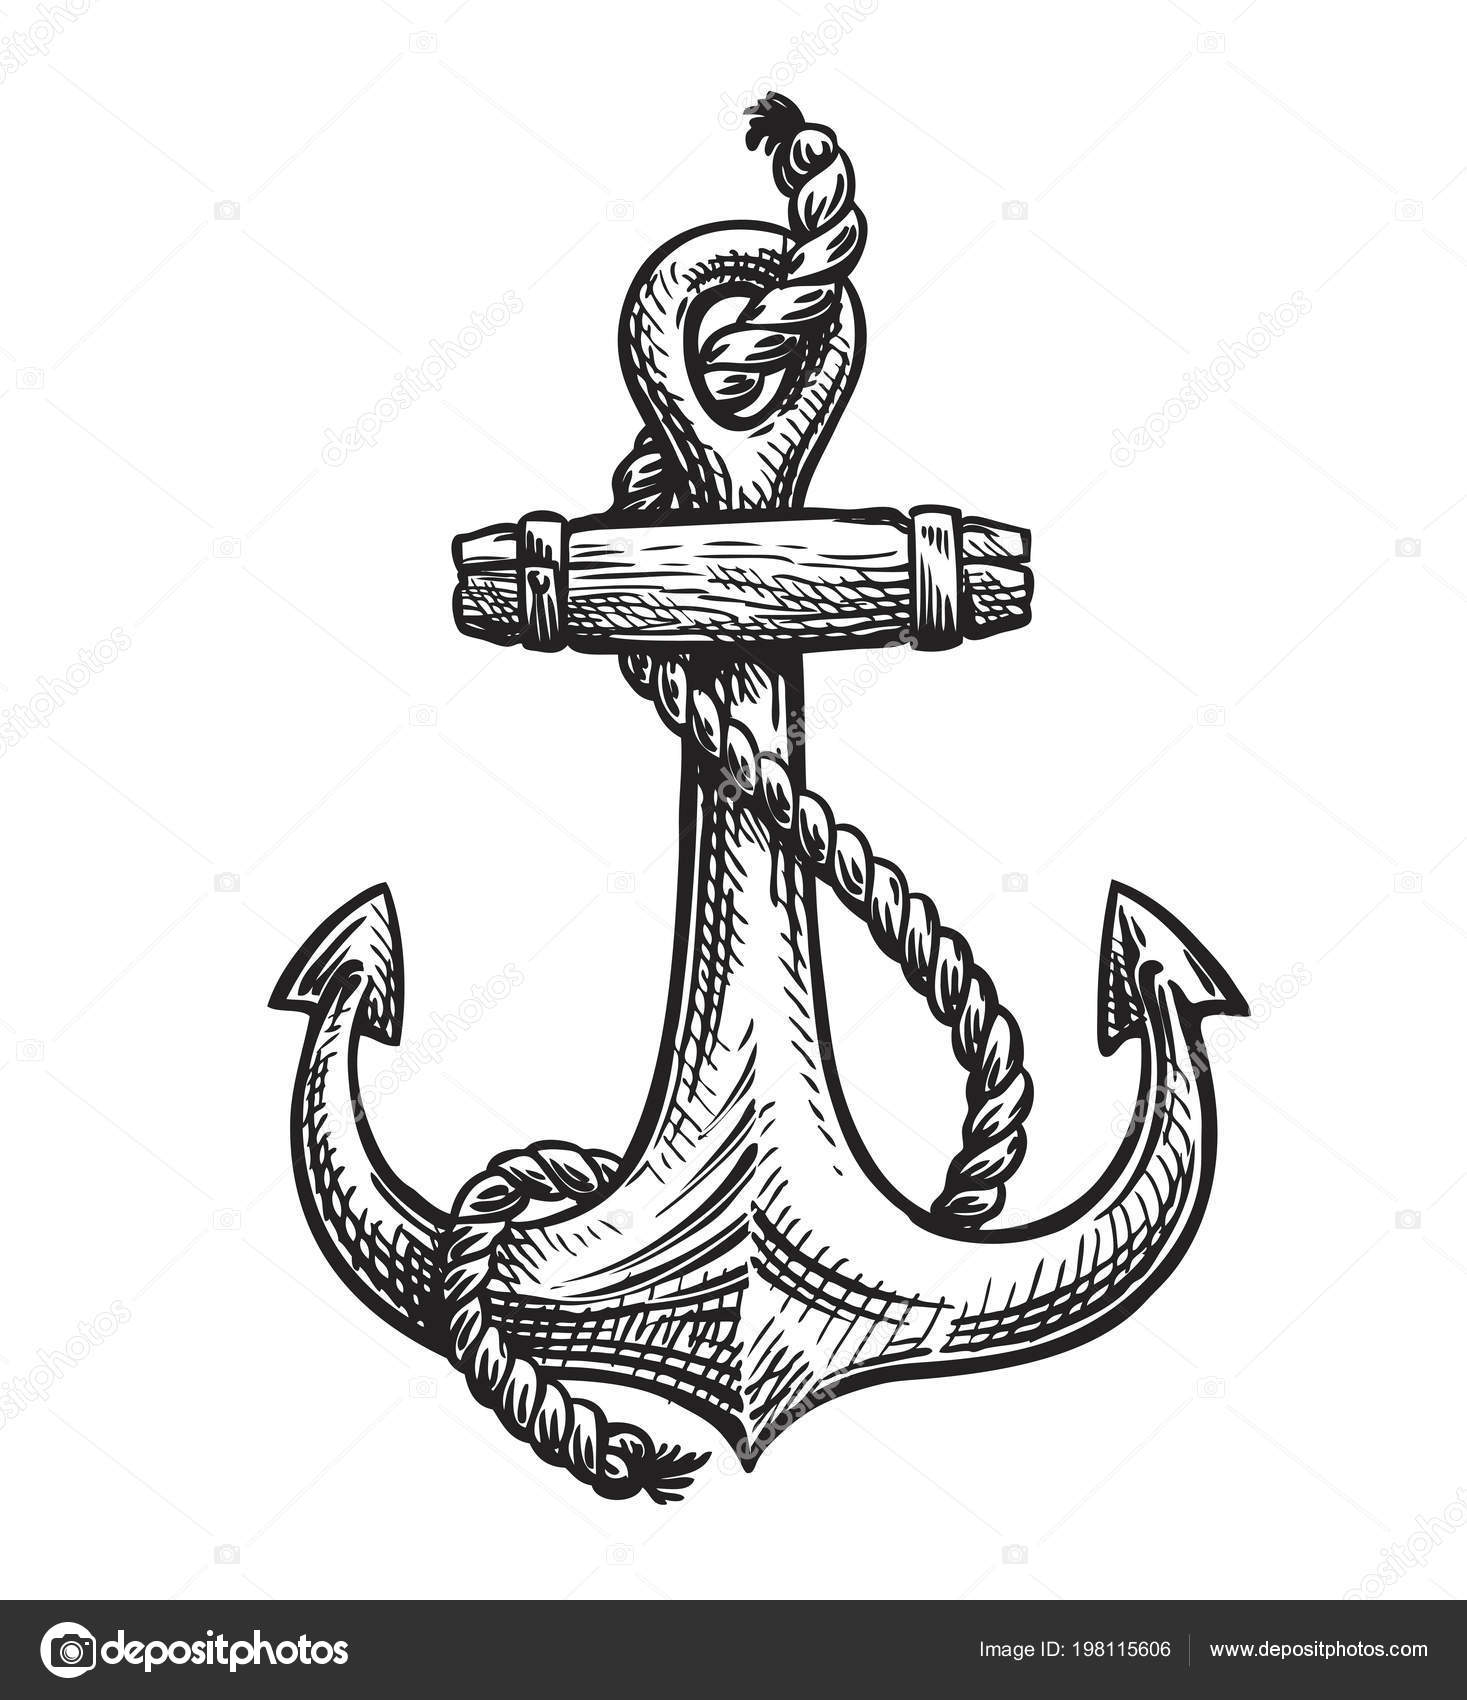 https://st4.depositphotos.com/1496387/19811/v/1600/depositphotos_198115606-stock-illustration-vintage-anchor-rope-hand-drawn.jpg